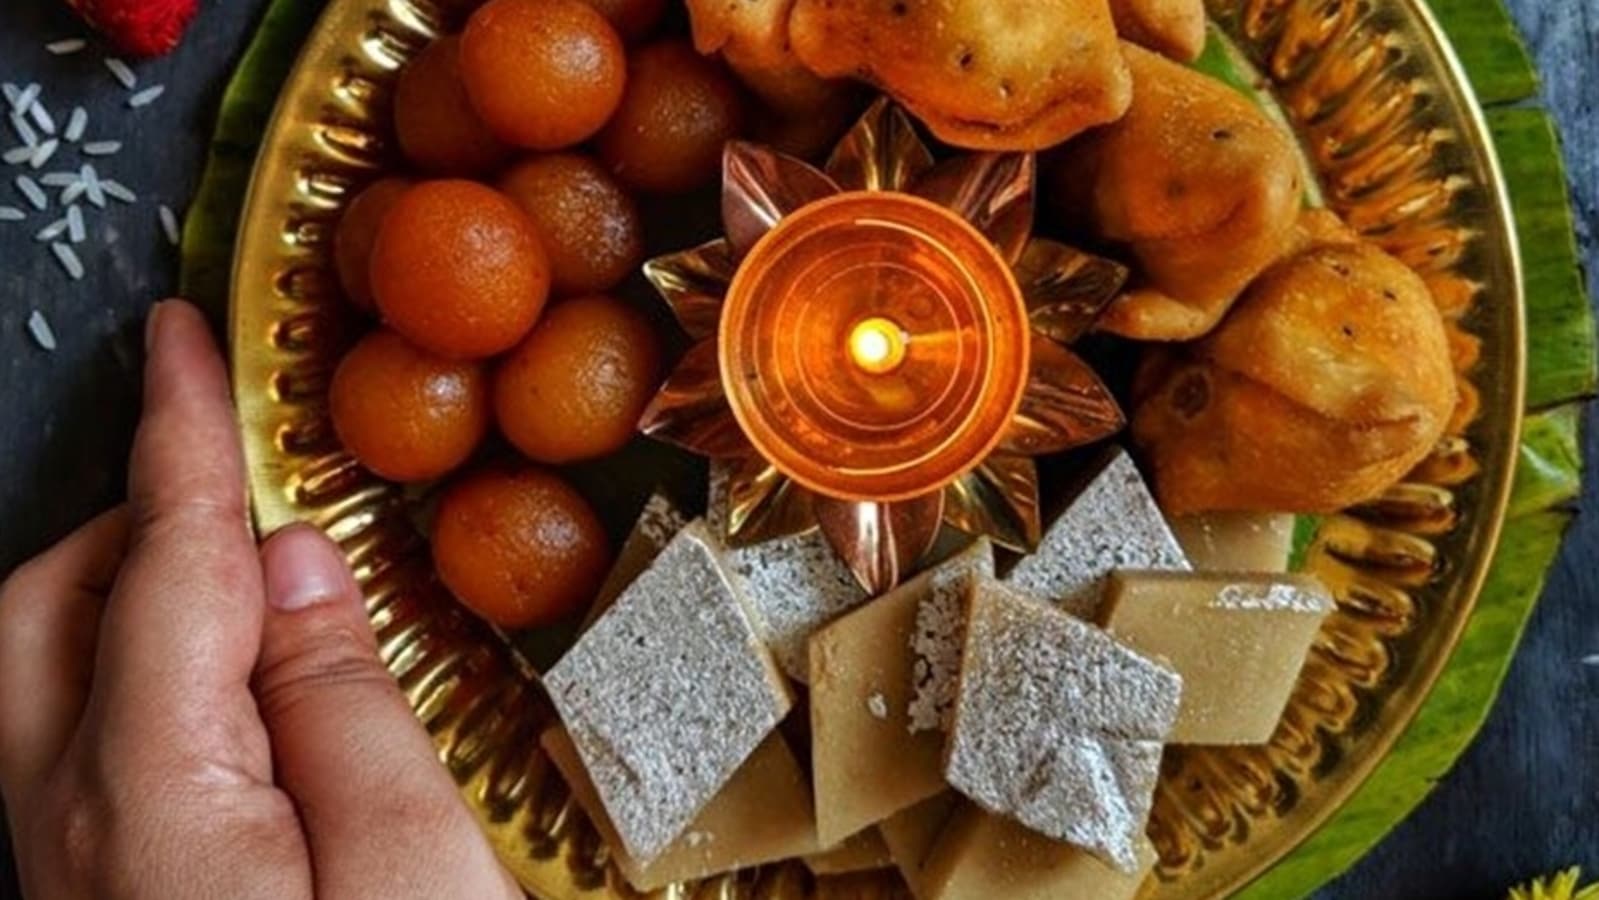 bhai-dooj-2022-5-foods-to-avoid-this-diwali-season-if-you-have-diabetes